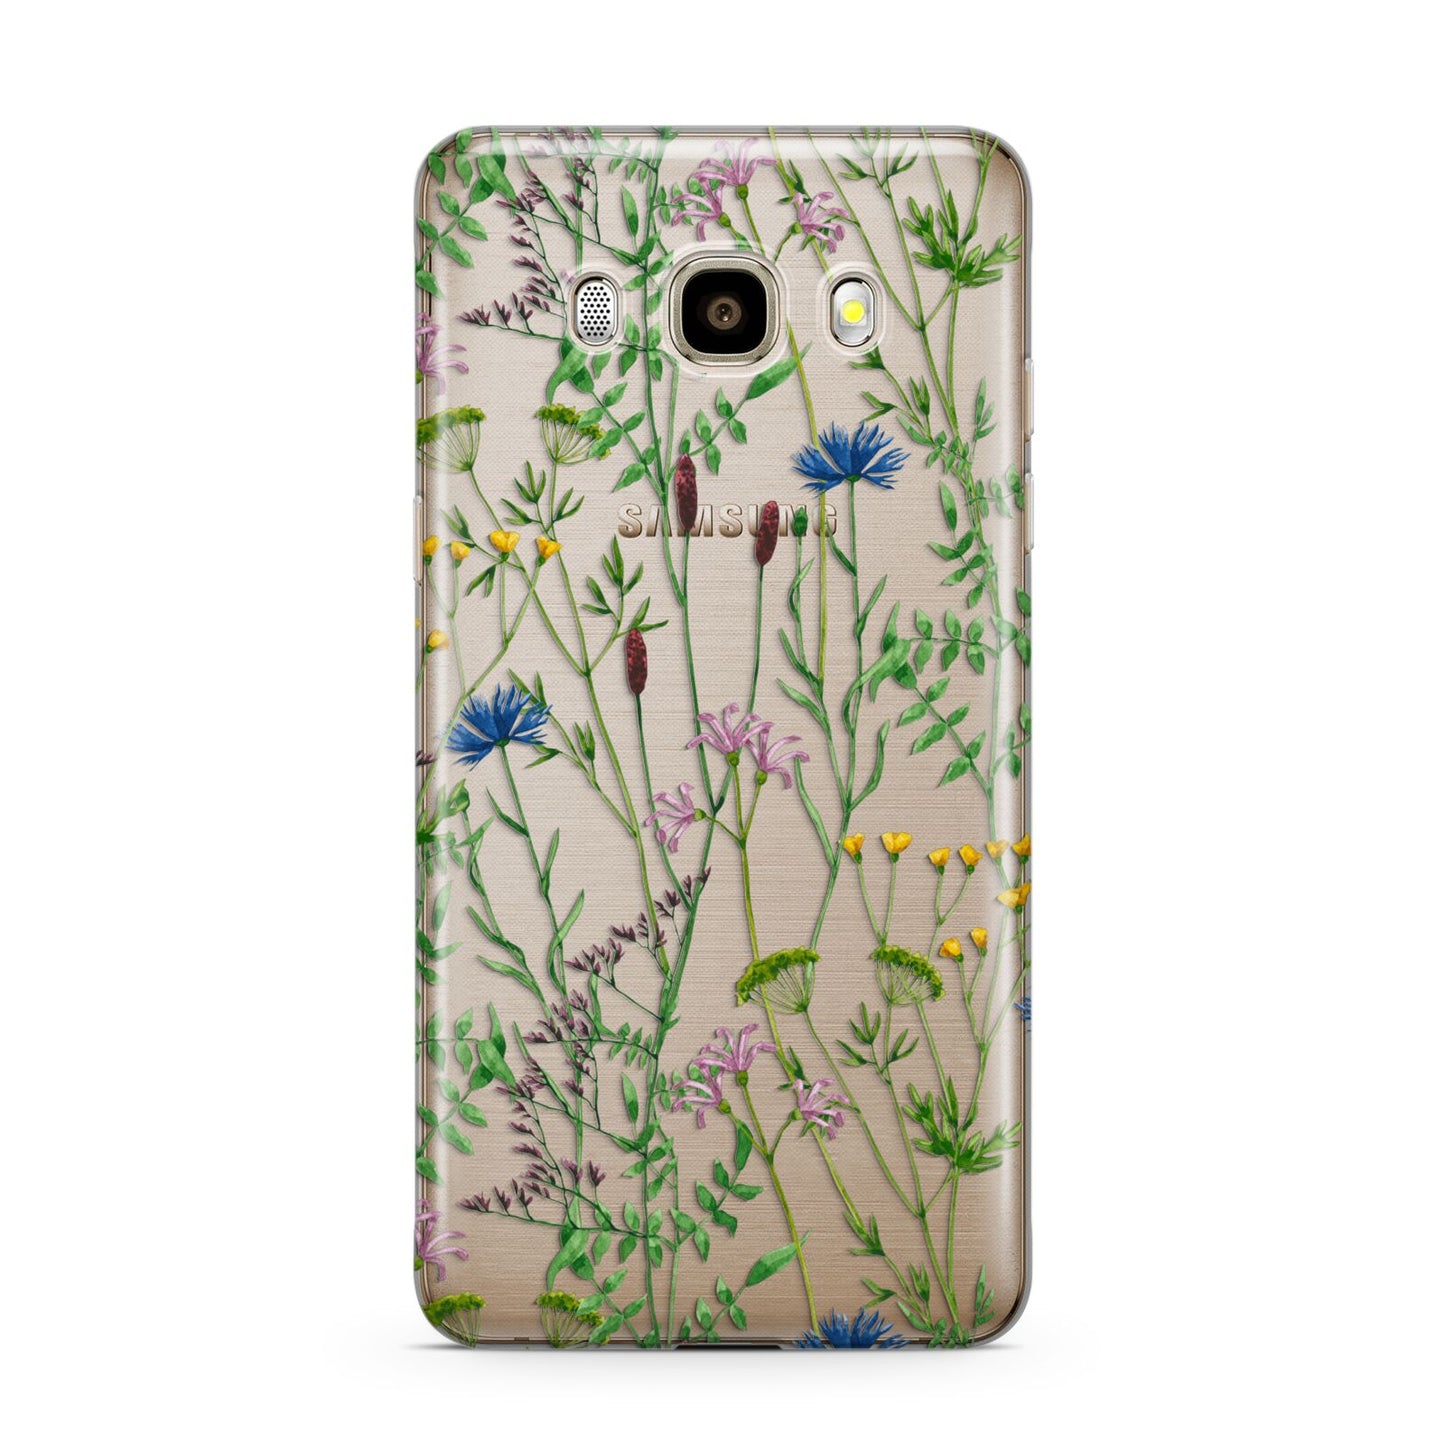 Wildflowers Samsung Galaxy J7 2016 Case on gold phone